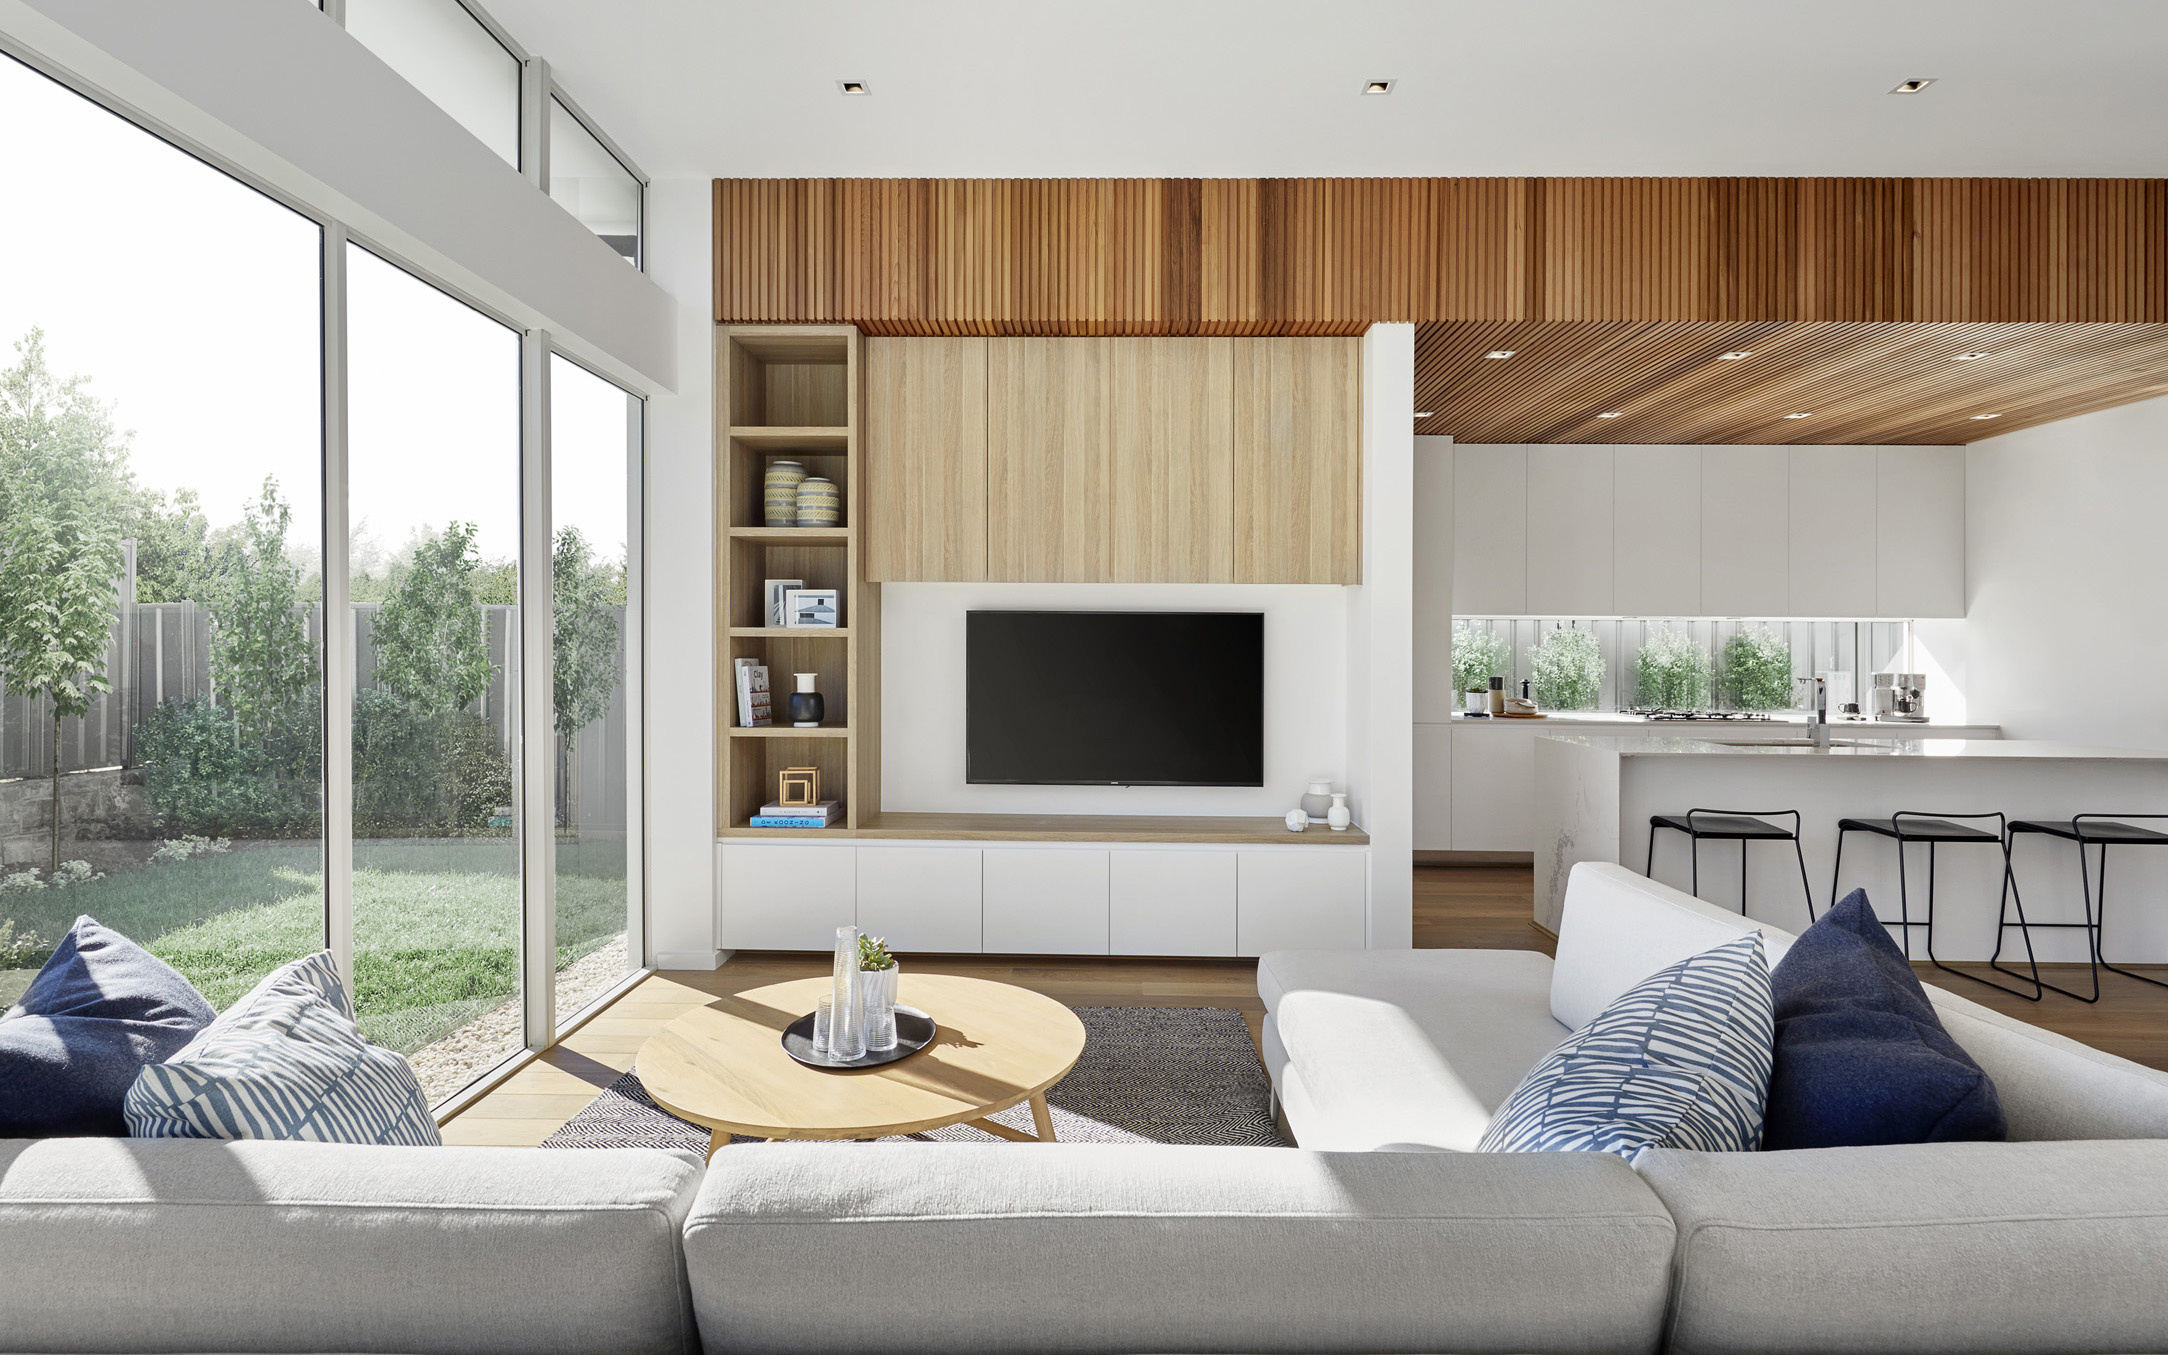 Rawson Homes Blog | Design Tips | Light can change a room